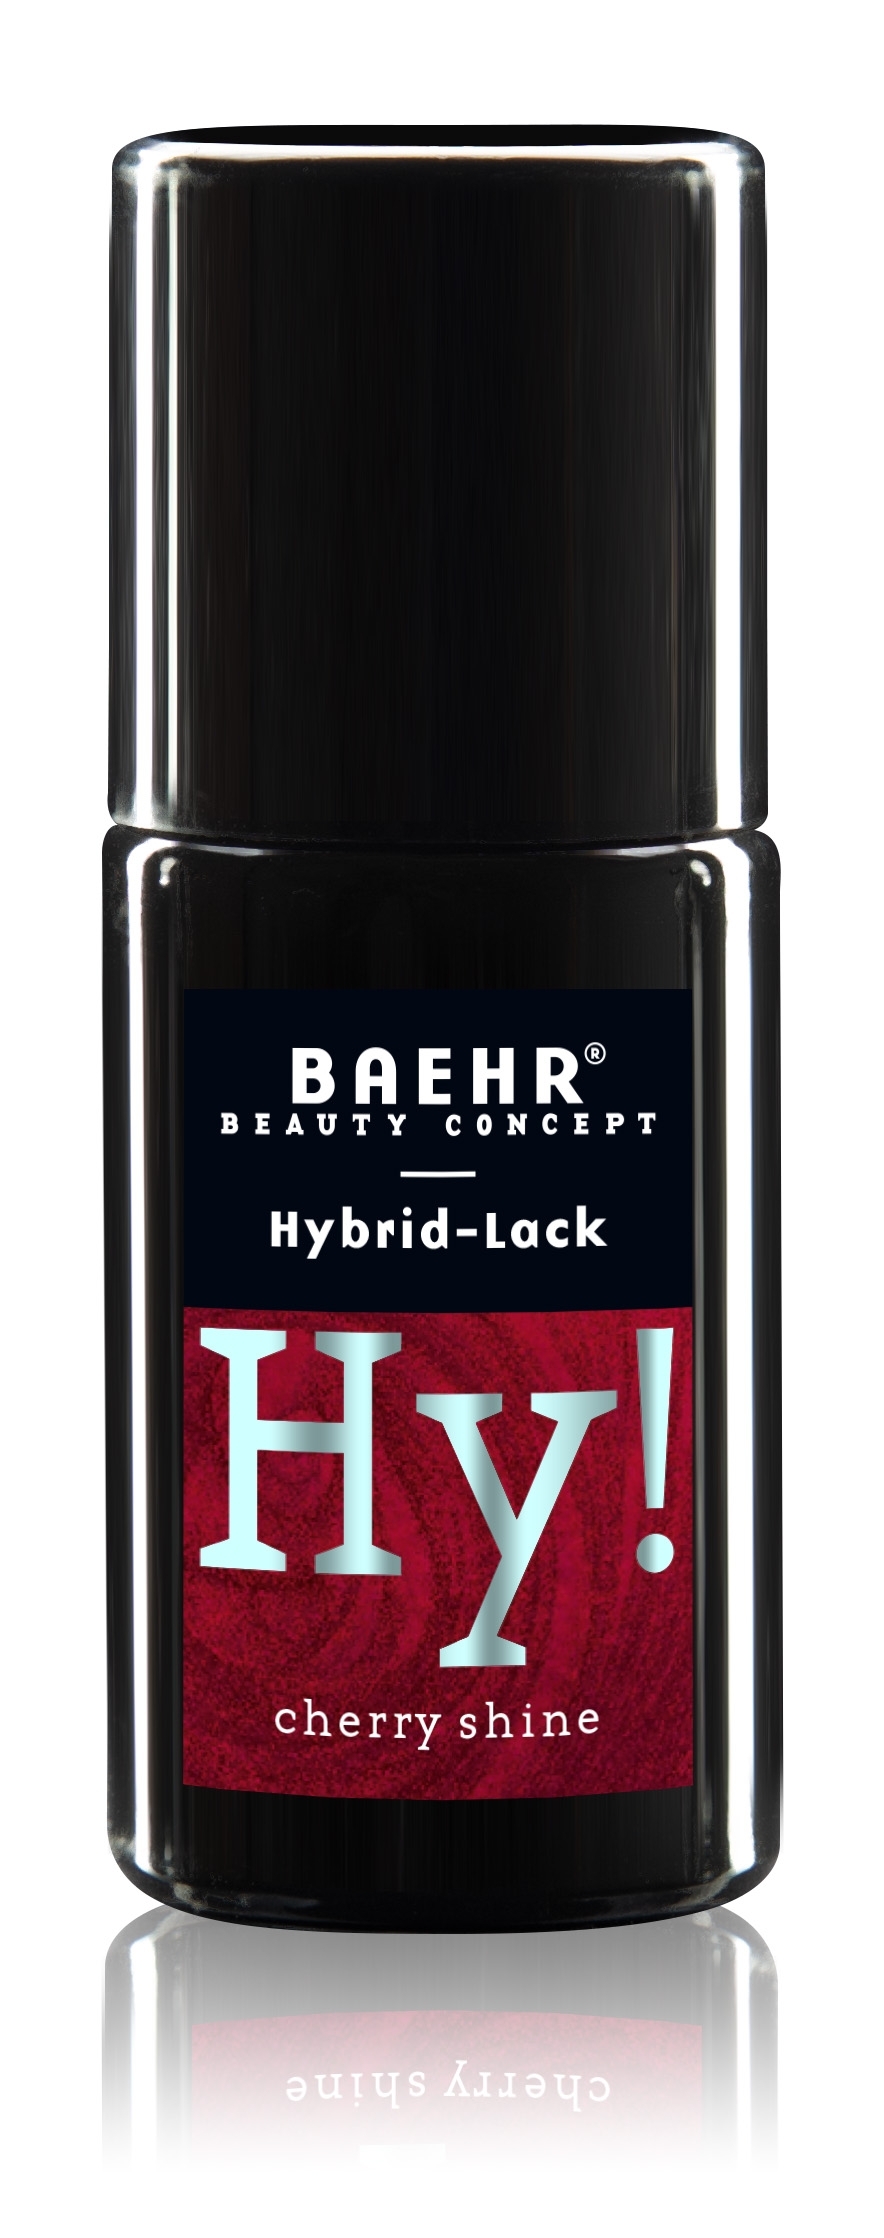 BAEHR BEAUTY CONCEPT - NAILS Hy! Hybrid-Lack, cherry shine 8 ml